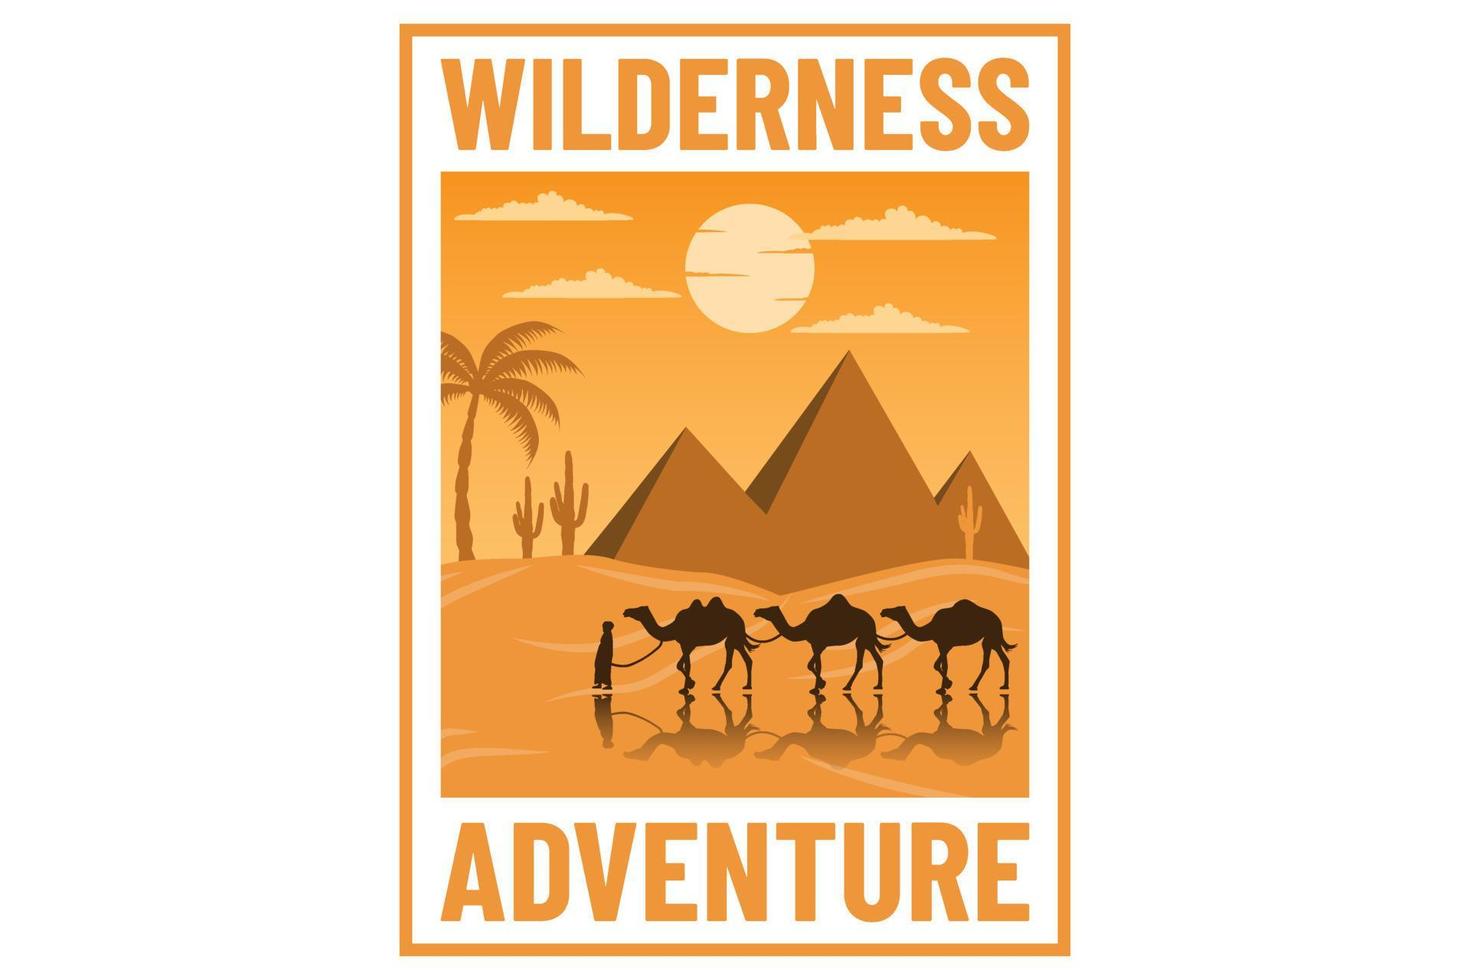 Wilderness adventure design vintage retro vector